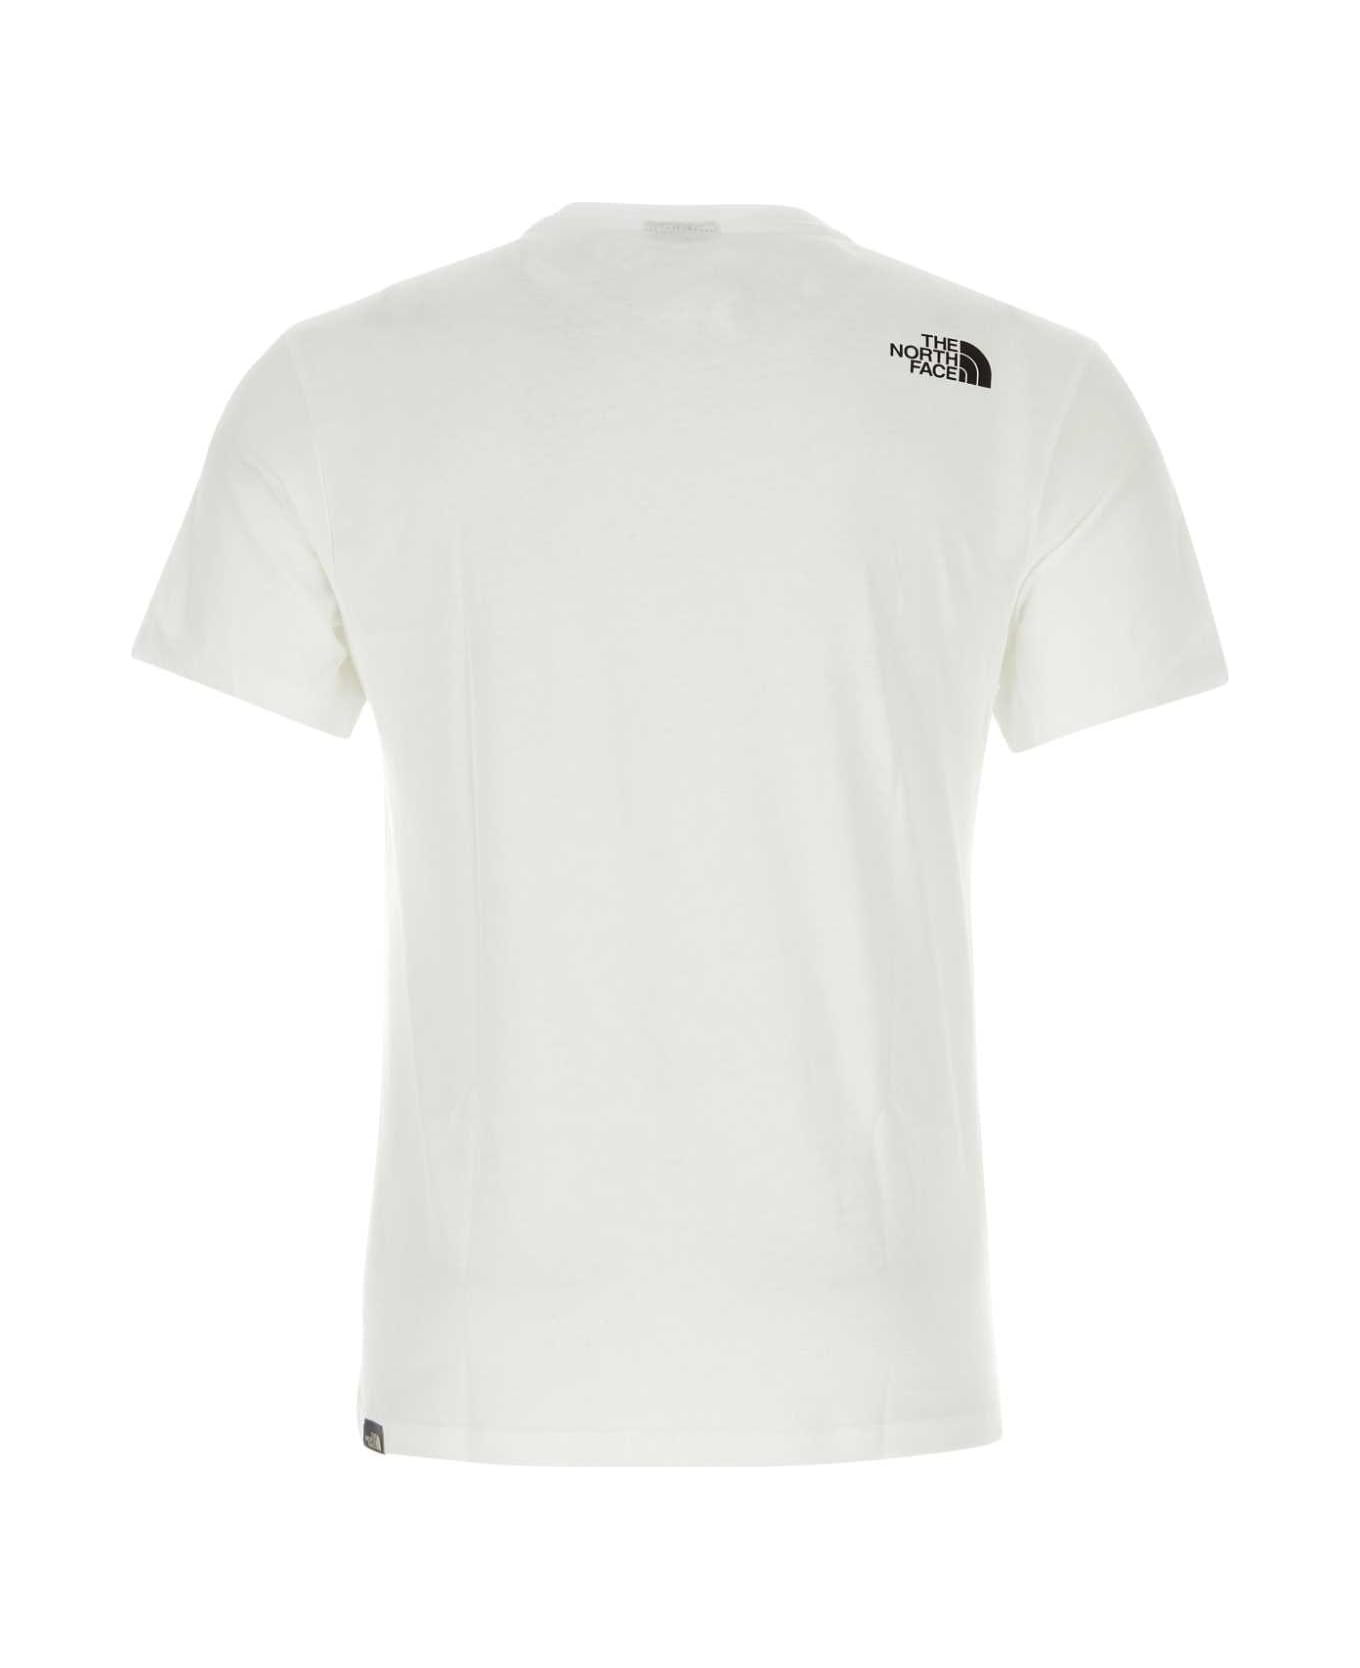 The North Face White Cotton T-shirt - TNF WHITE